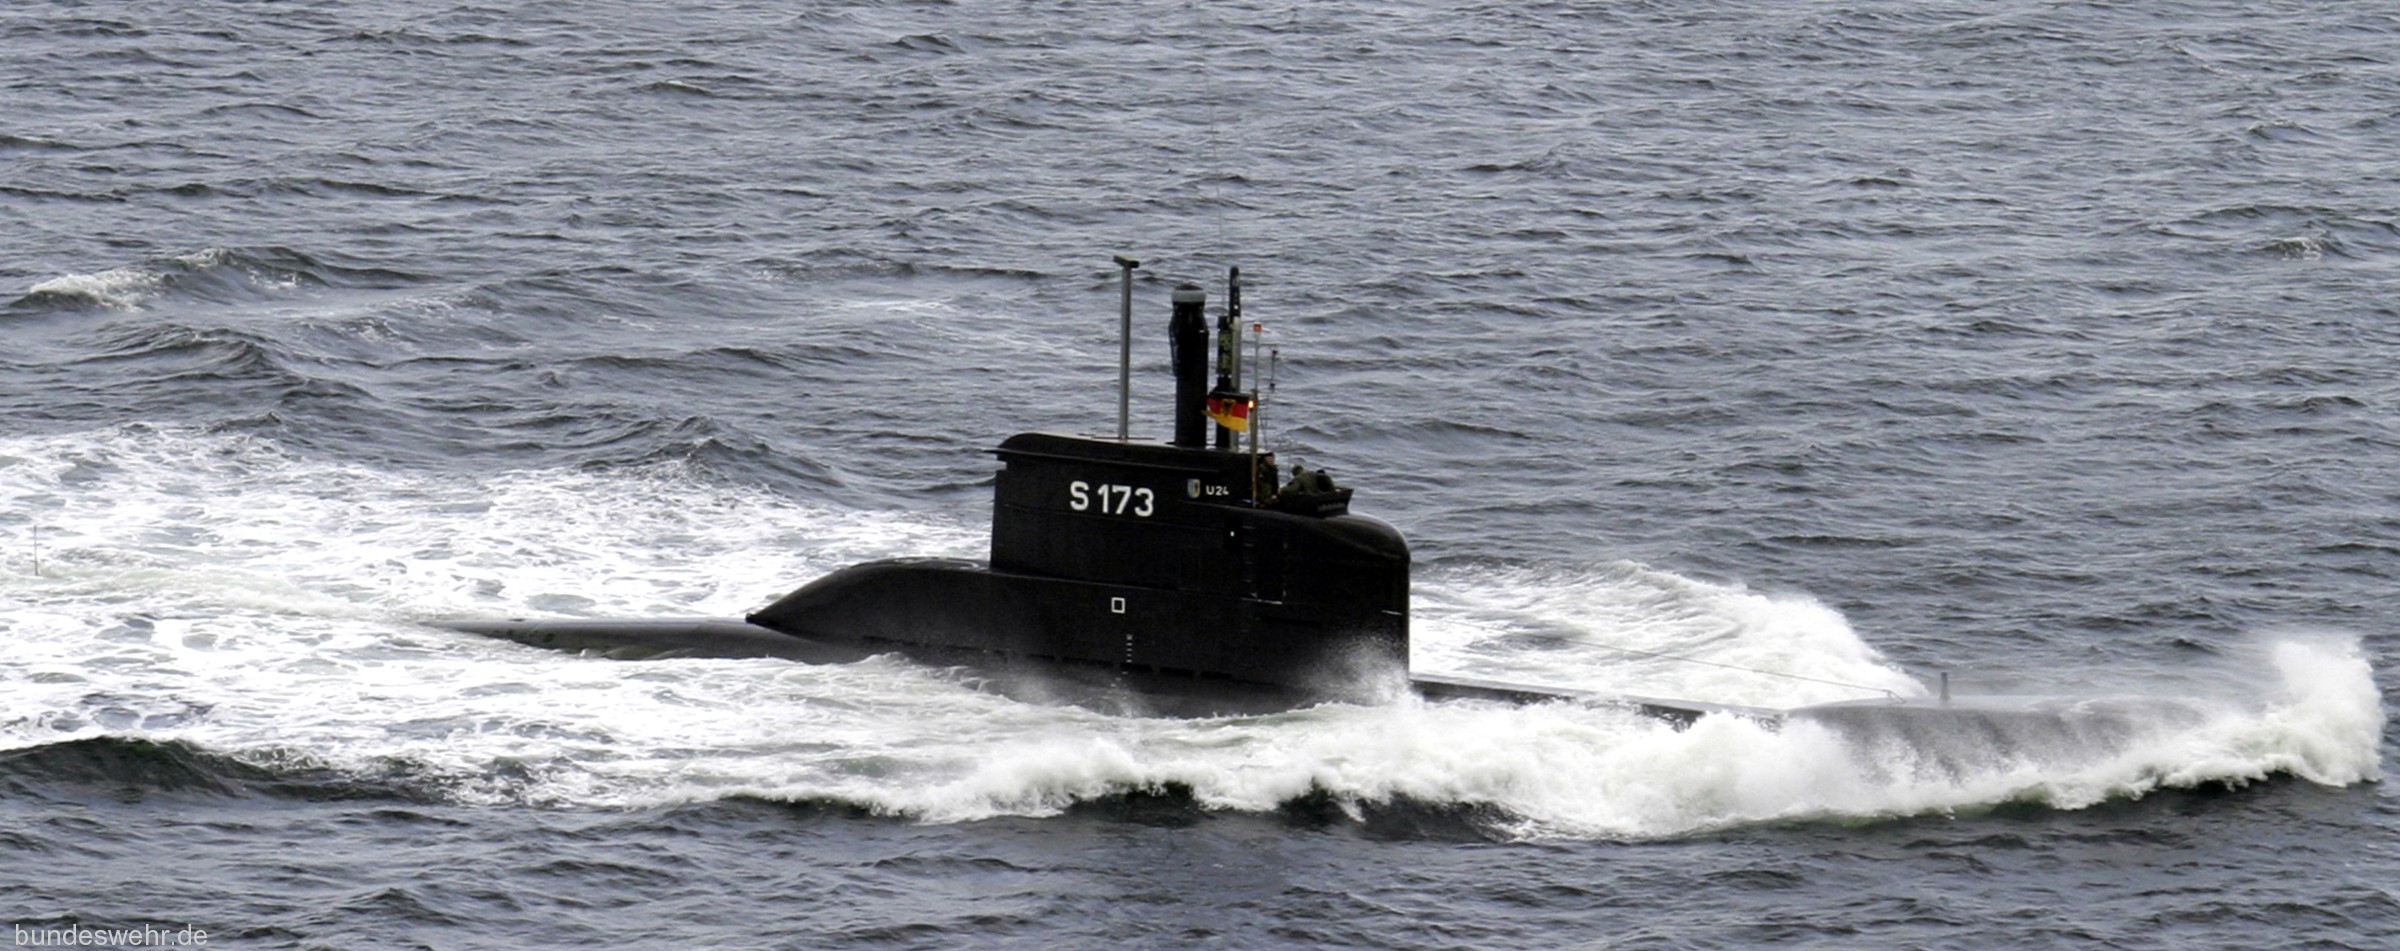 s-173 fgs u24 type 206 class submarine german navy 06